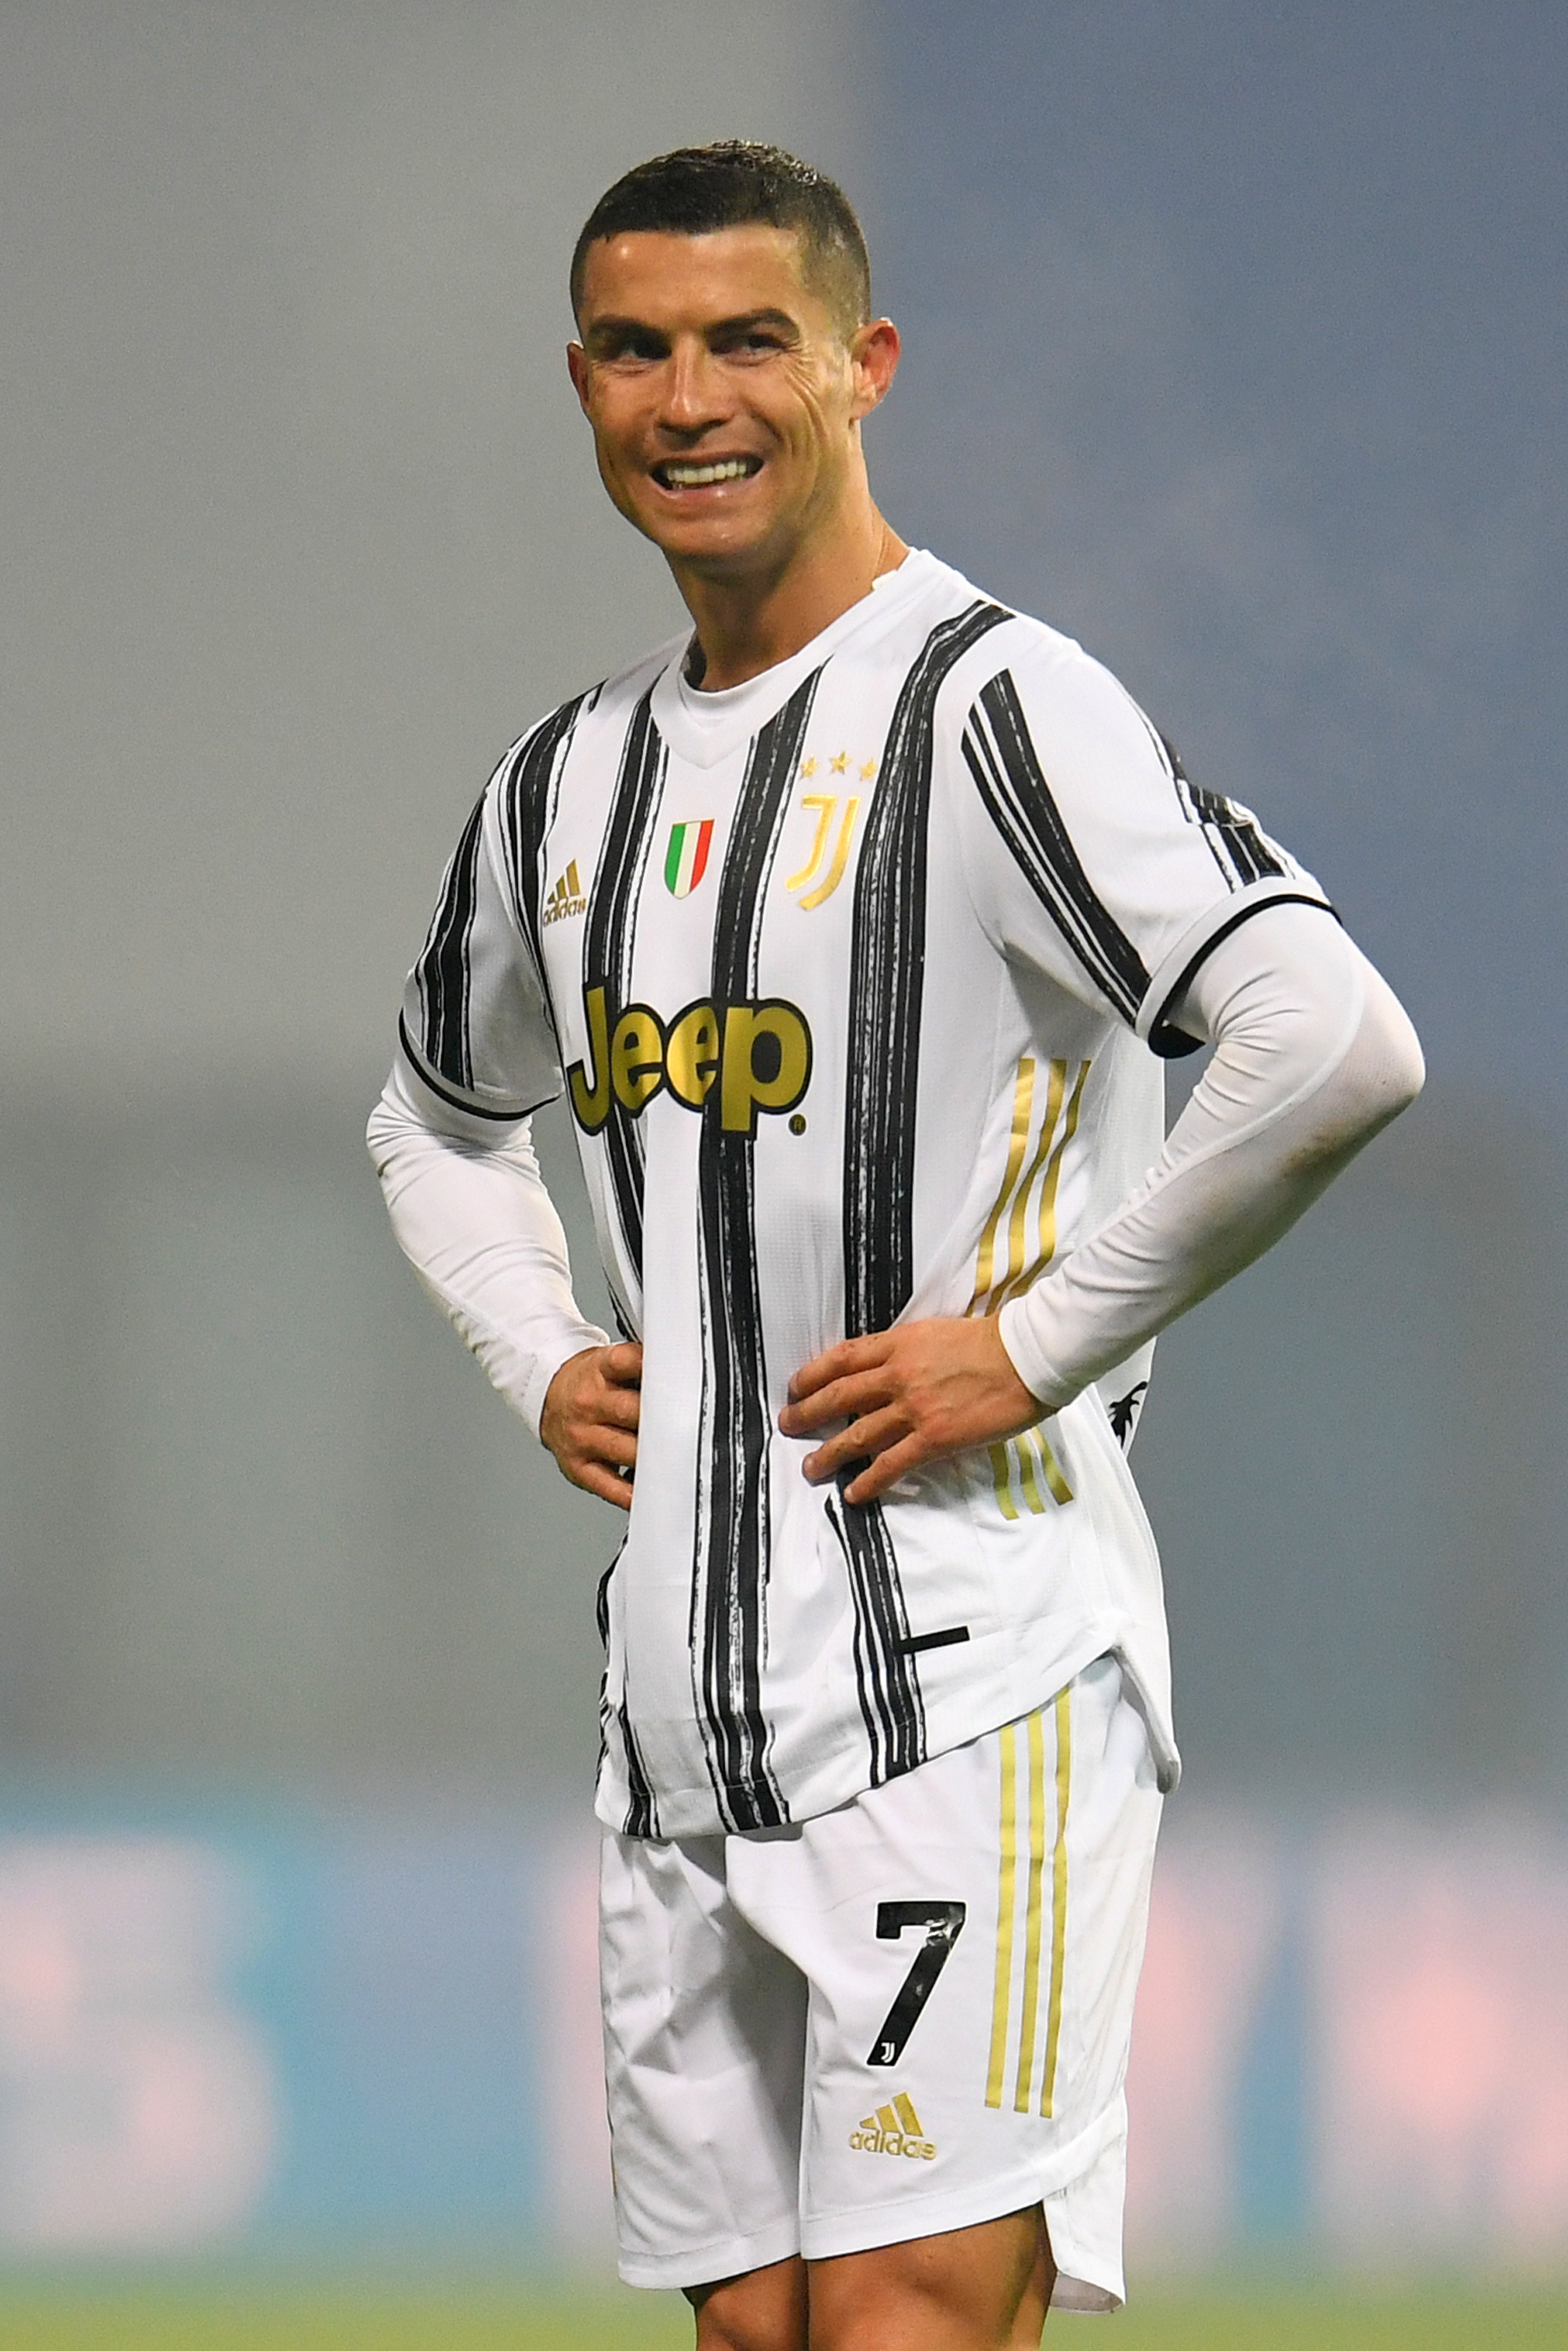 Present day Cristiano Ronaldo in a Juventus uniform.